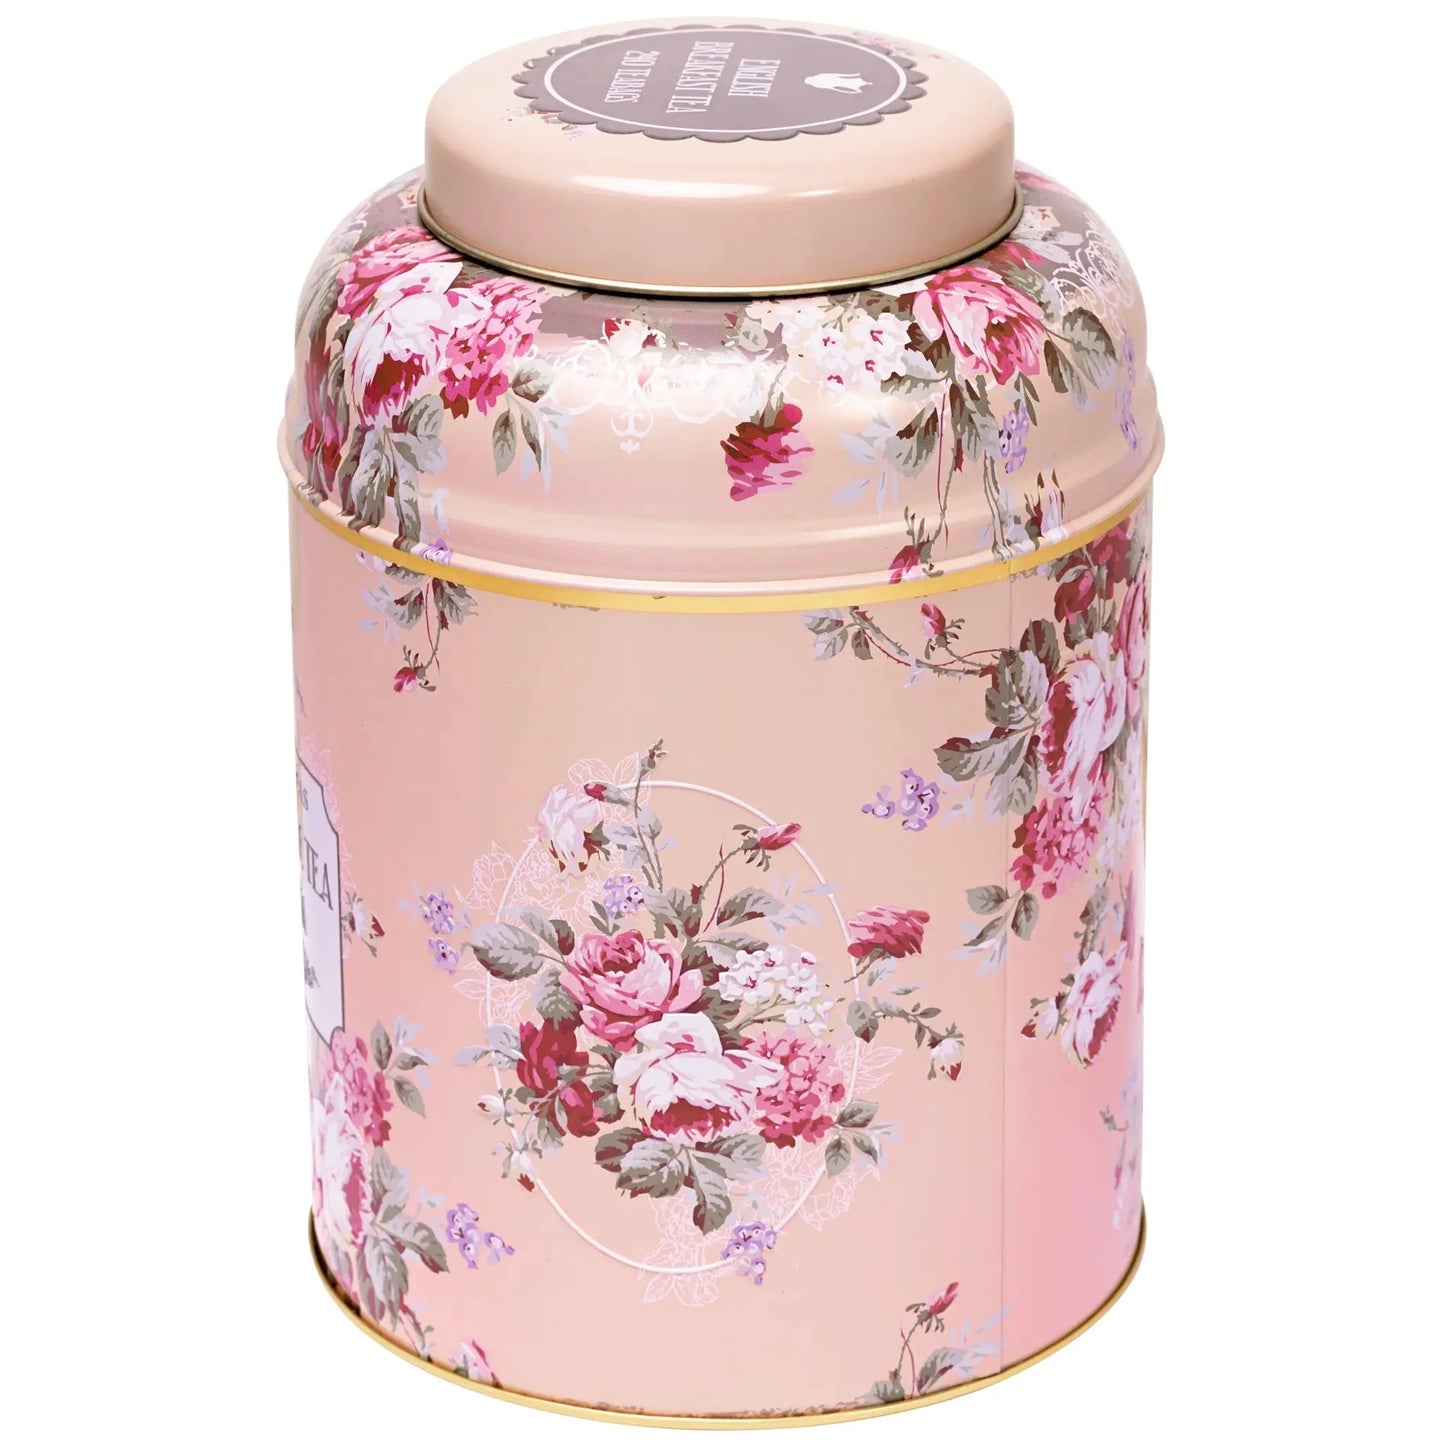 XL Vintage Tea Caddy in Floral Blush Tea Tins New English Teas 